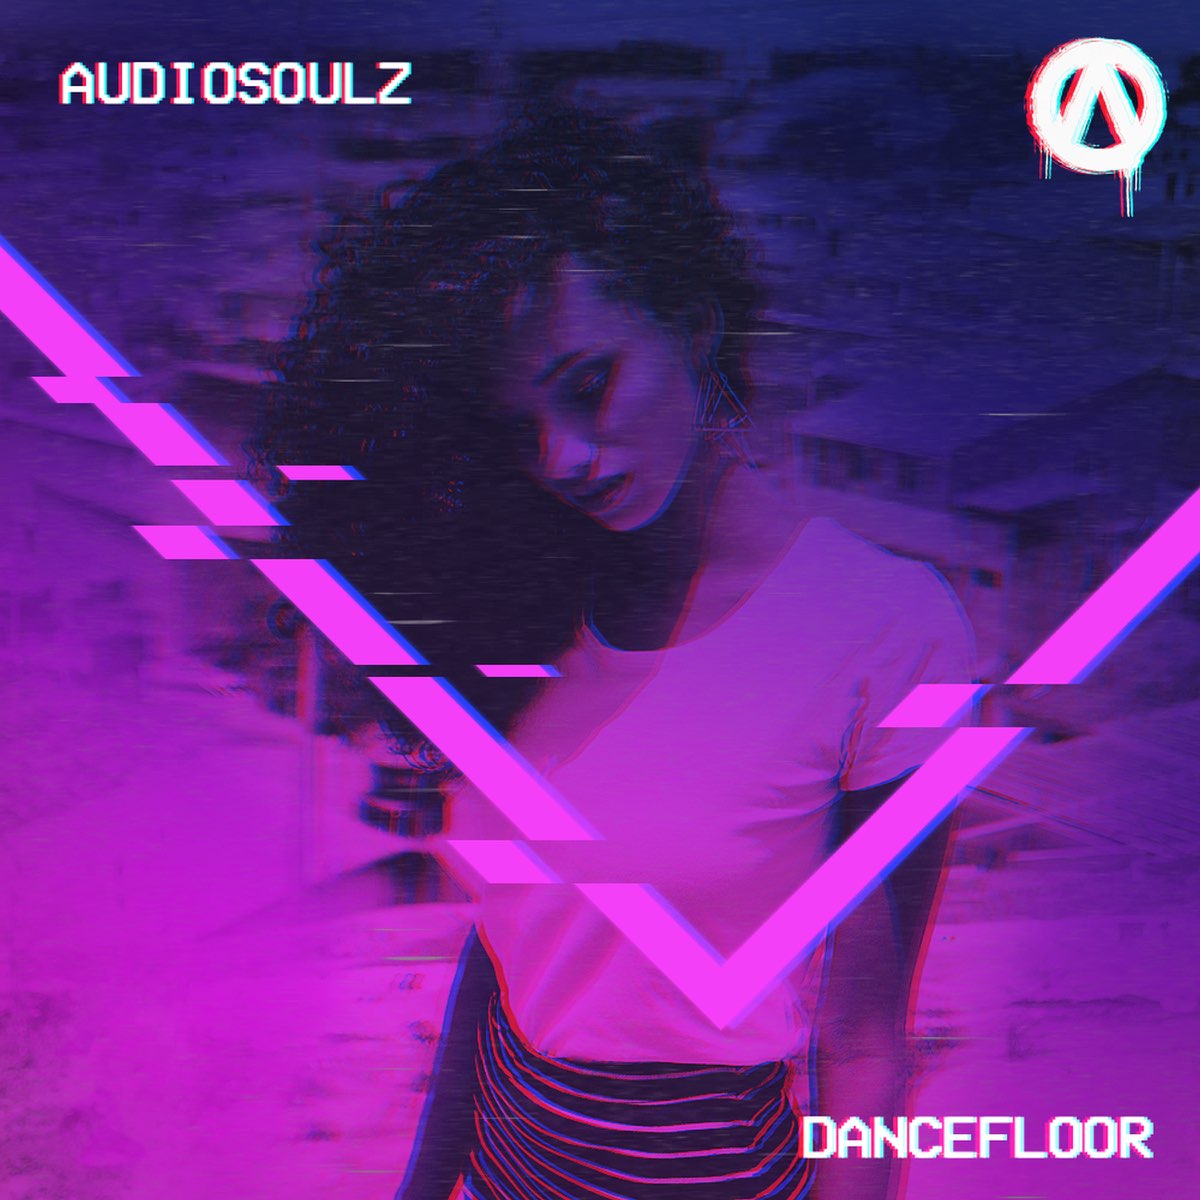 Morozoff kick the dancefloor. Dancefloor Audiosoulz. Audiosoulz - Dance Floor. Audiosoulz фото. Девушка из клипа Audiosoulz.